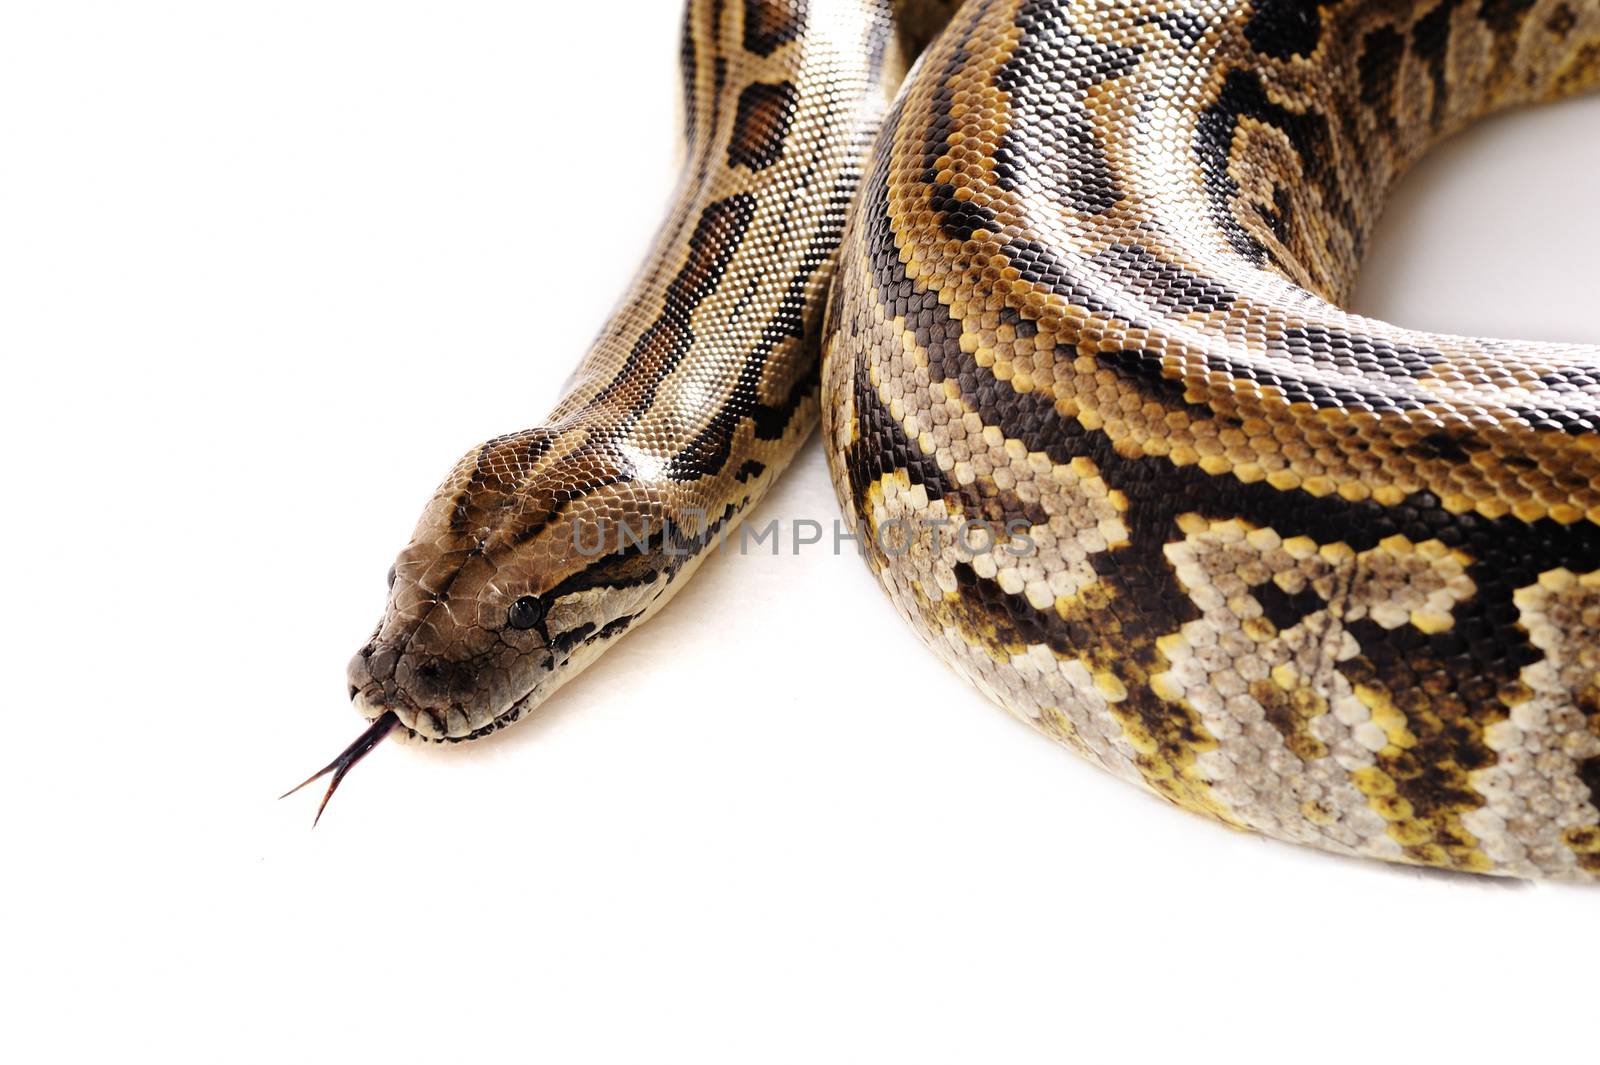 Viper Boa snake wild reptile animal